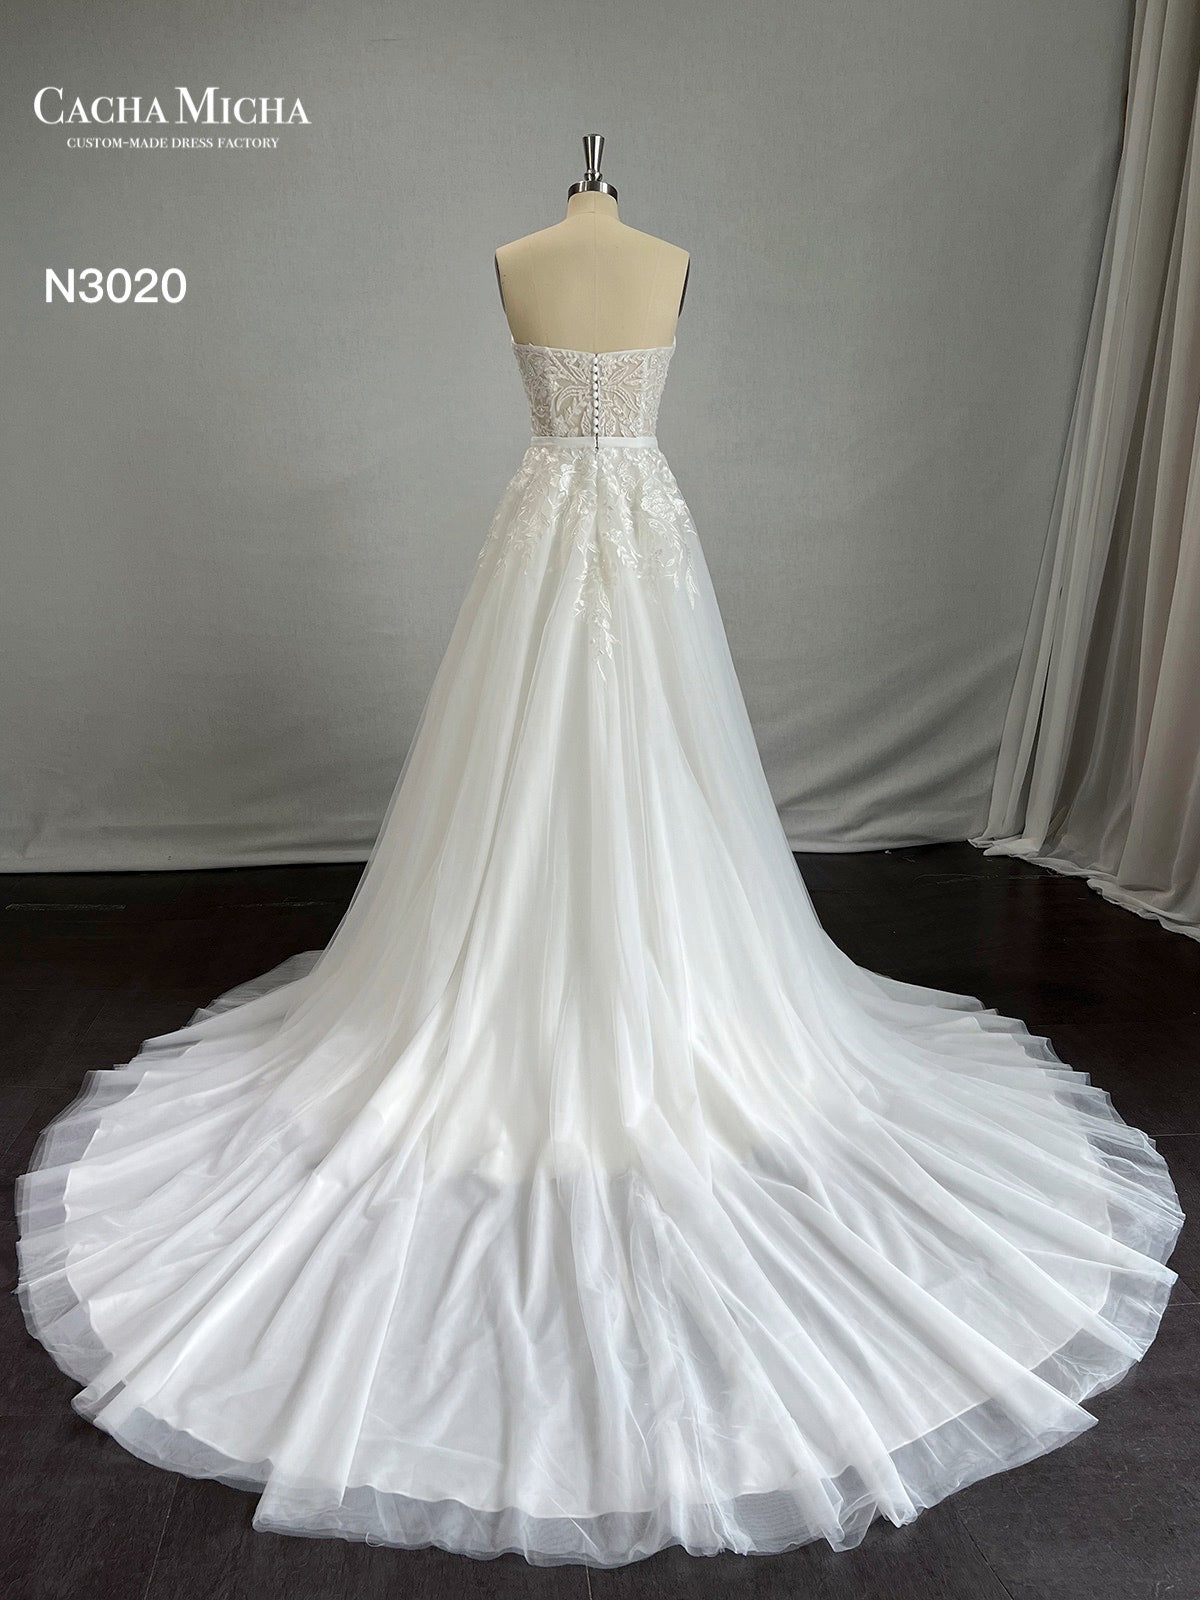 Beaded Lace Mermaid Wedding Dress With Detachable Train N3020